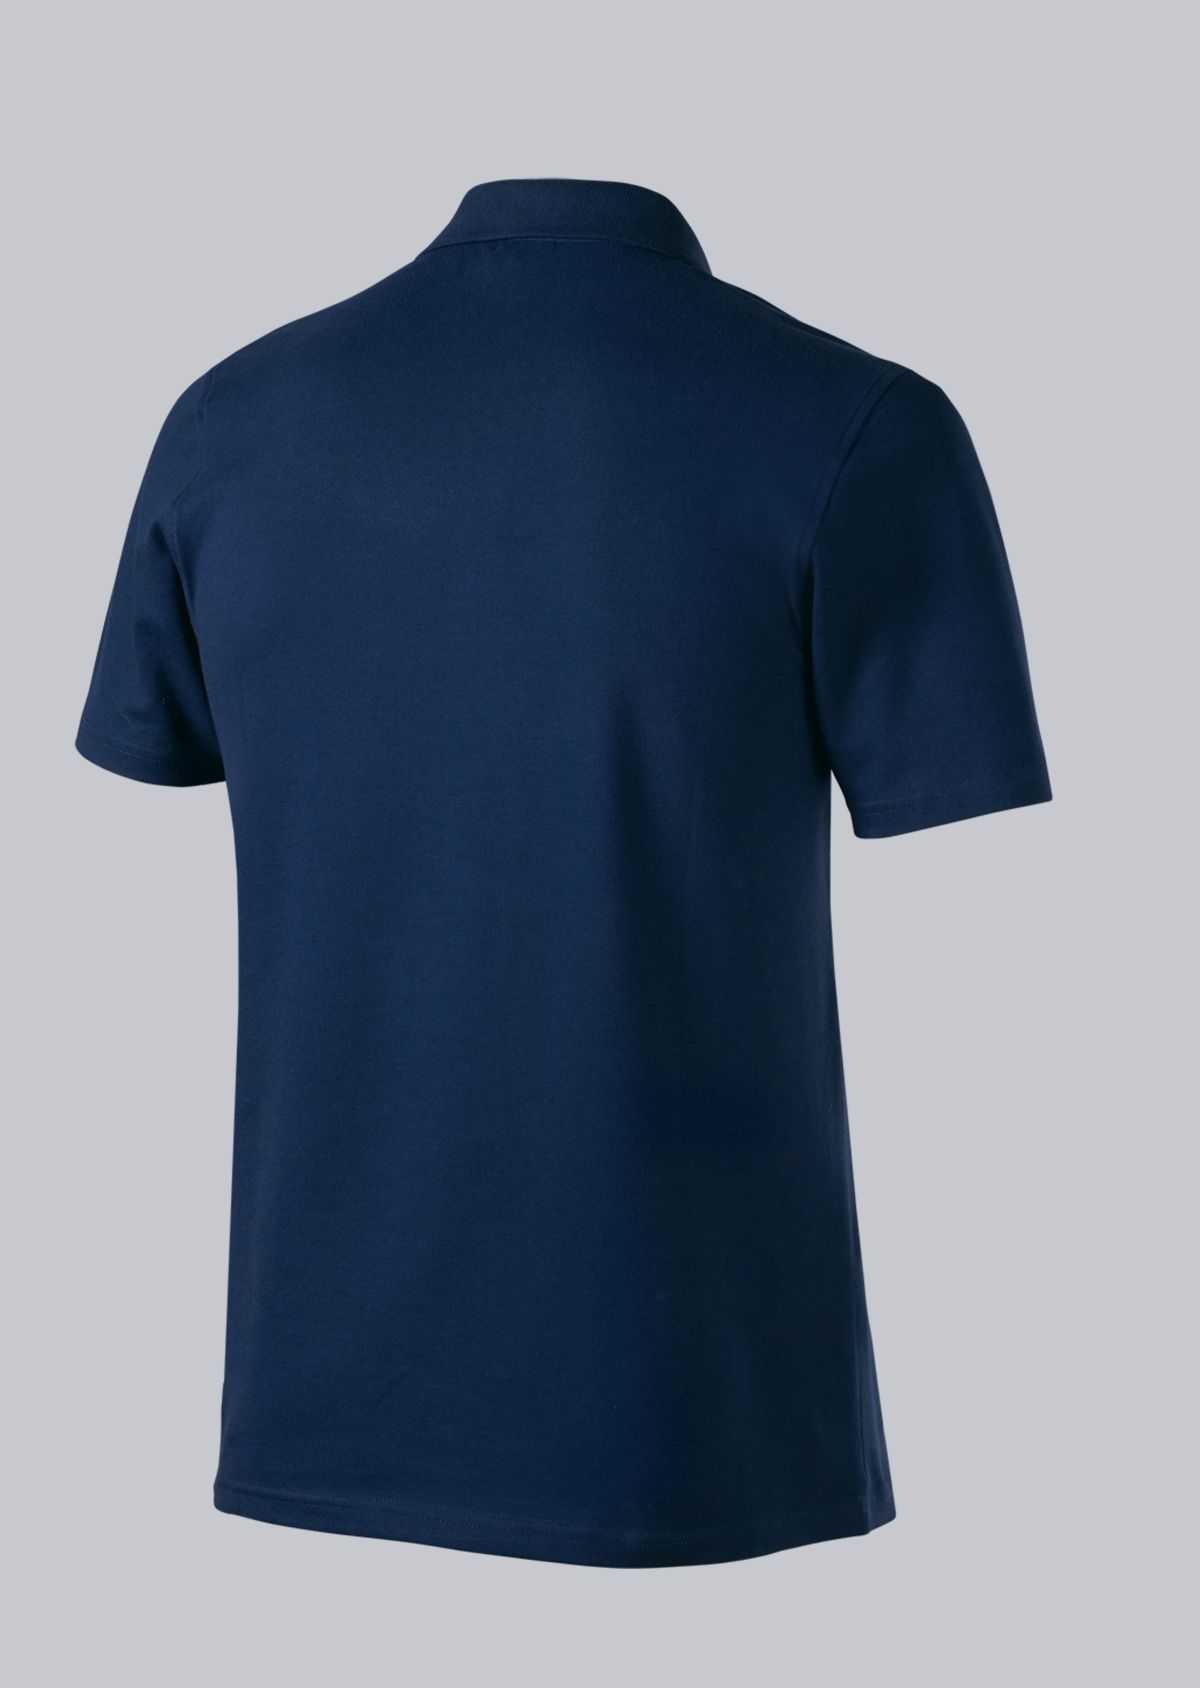 BP® Unisex polo shirt